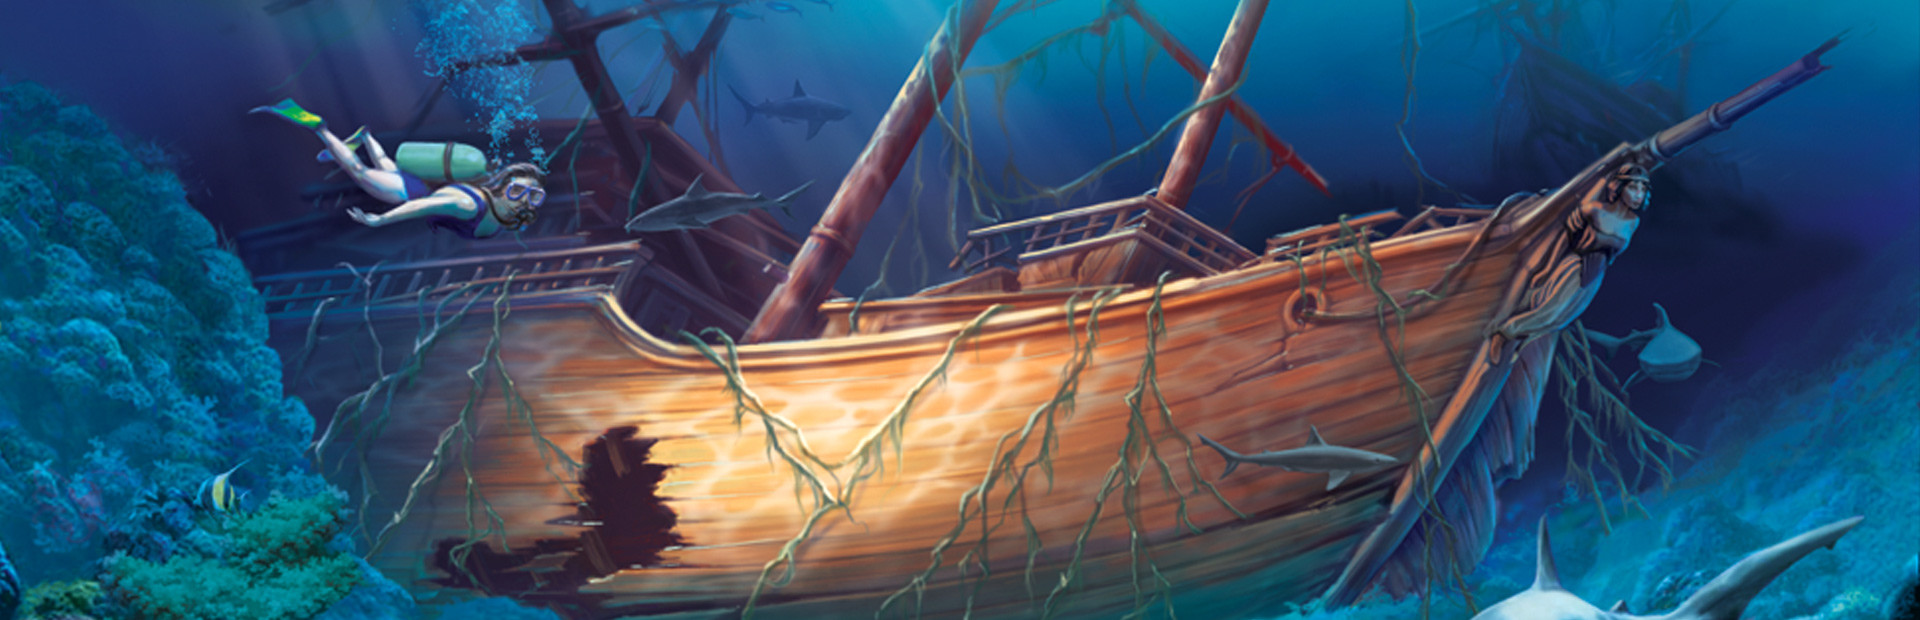 Nancy Drew®: Ransom of the Seven Ships cover image